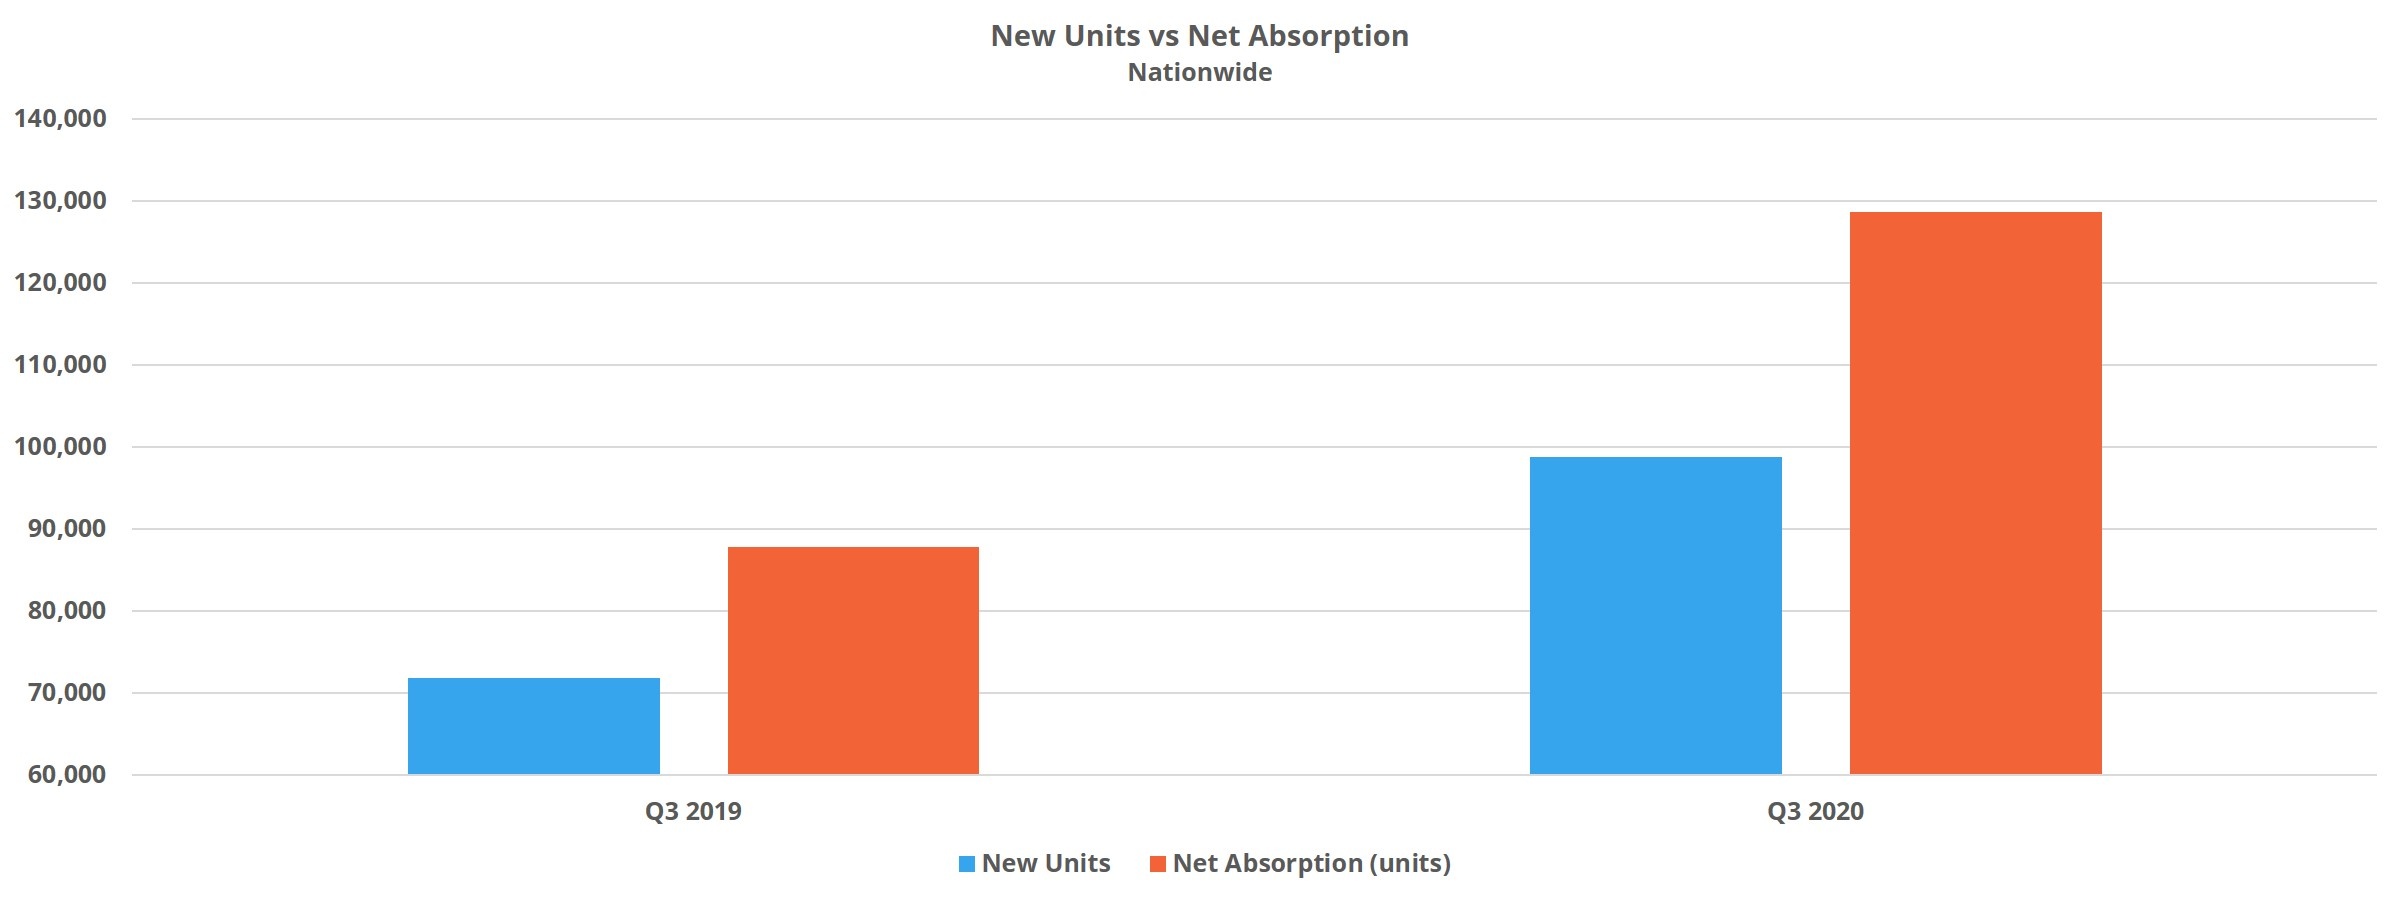 New Units vs Net Absorption